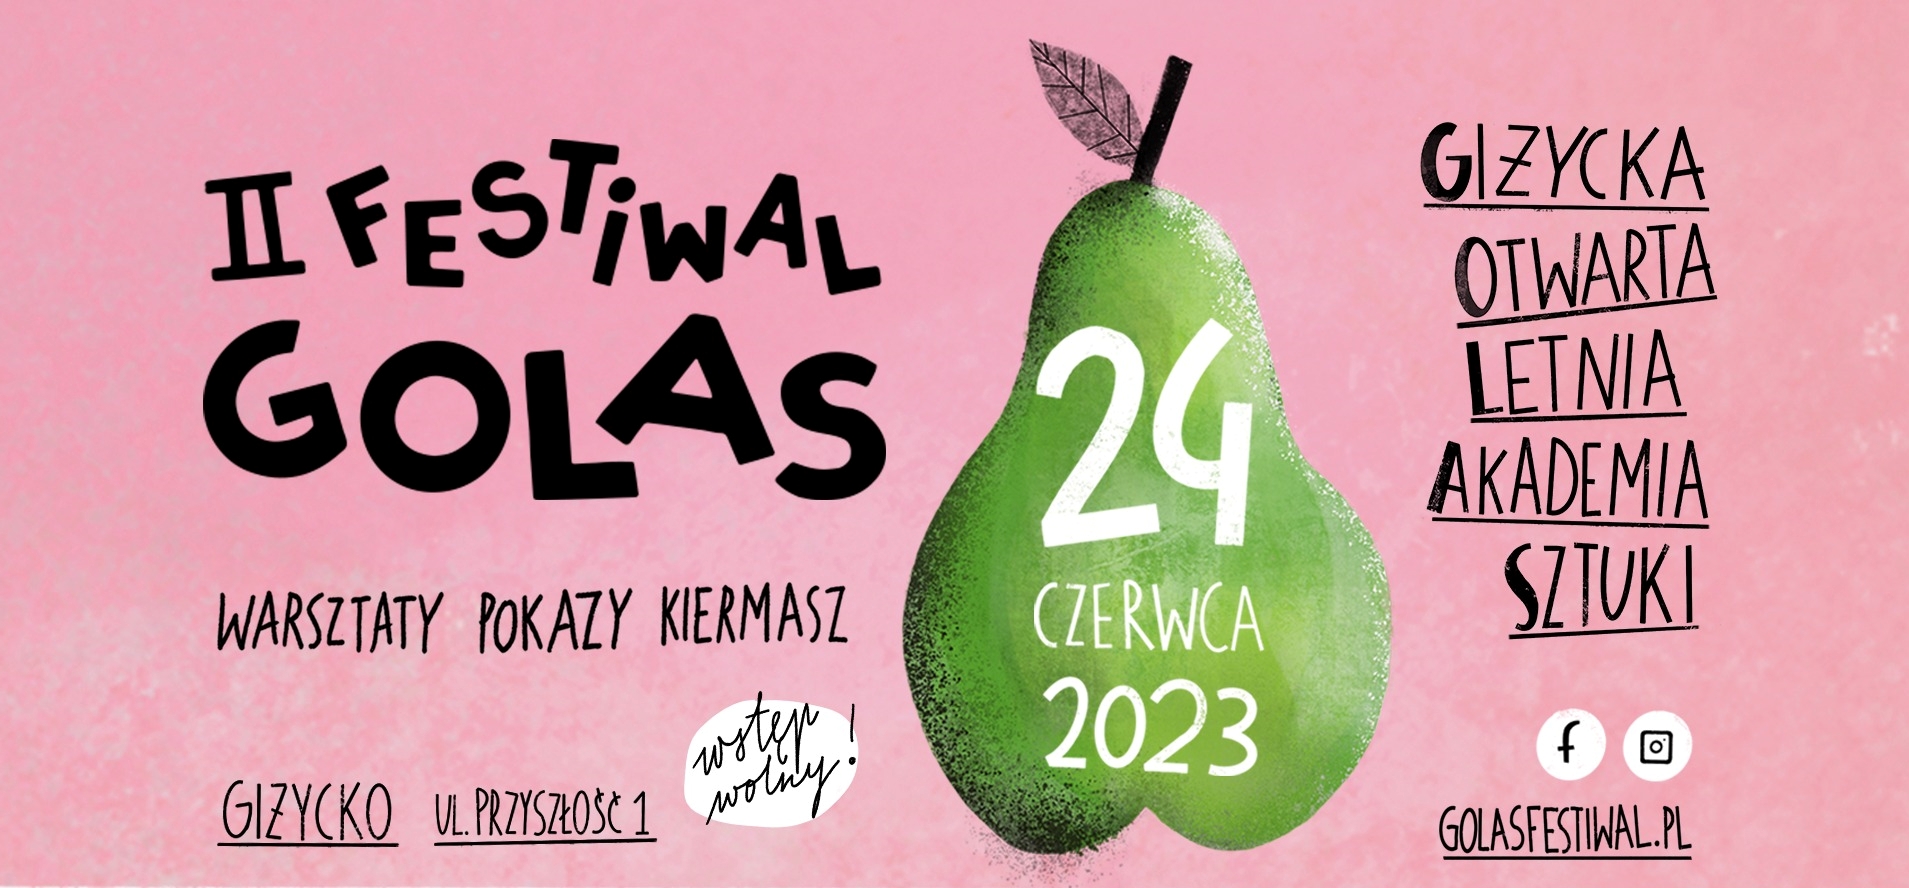 Festiwal Golas. II Giżycka Otwarta Letnia Akademia Sztuki